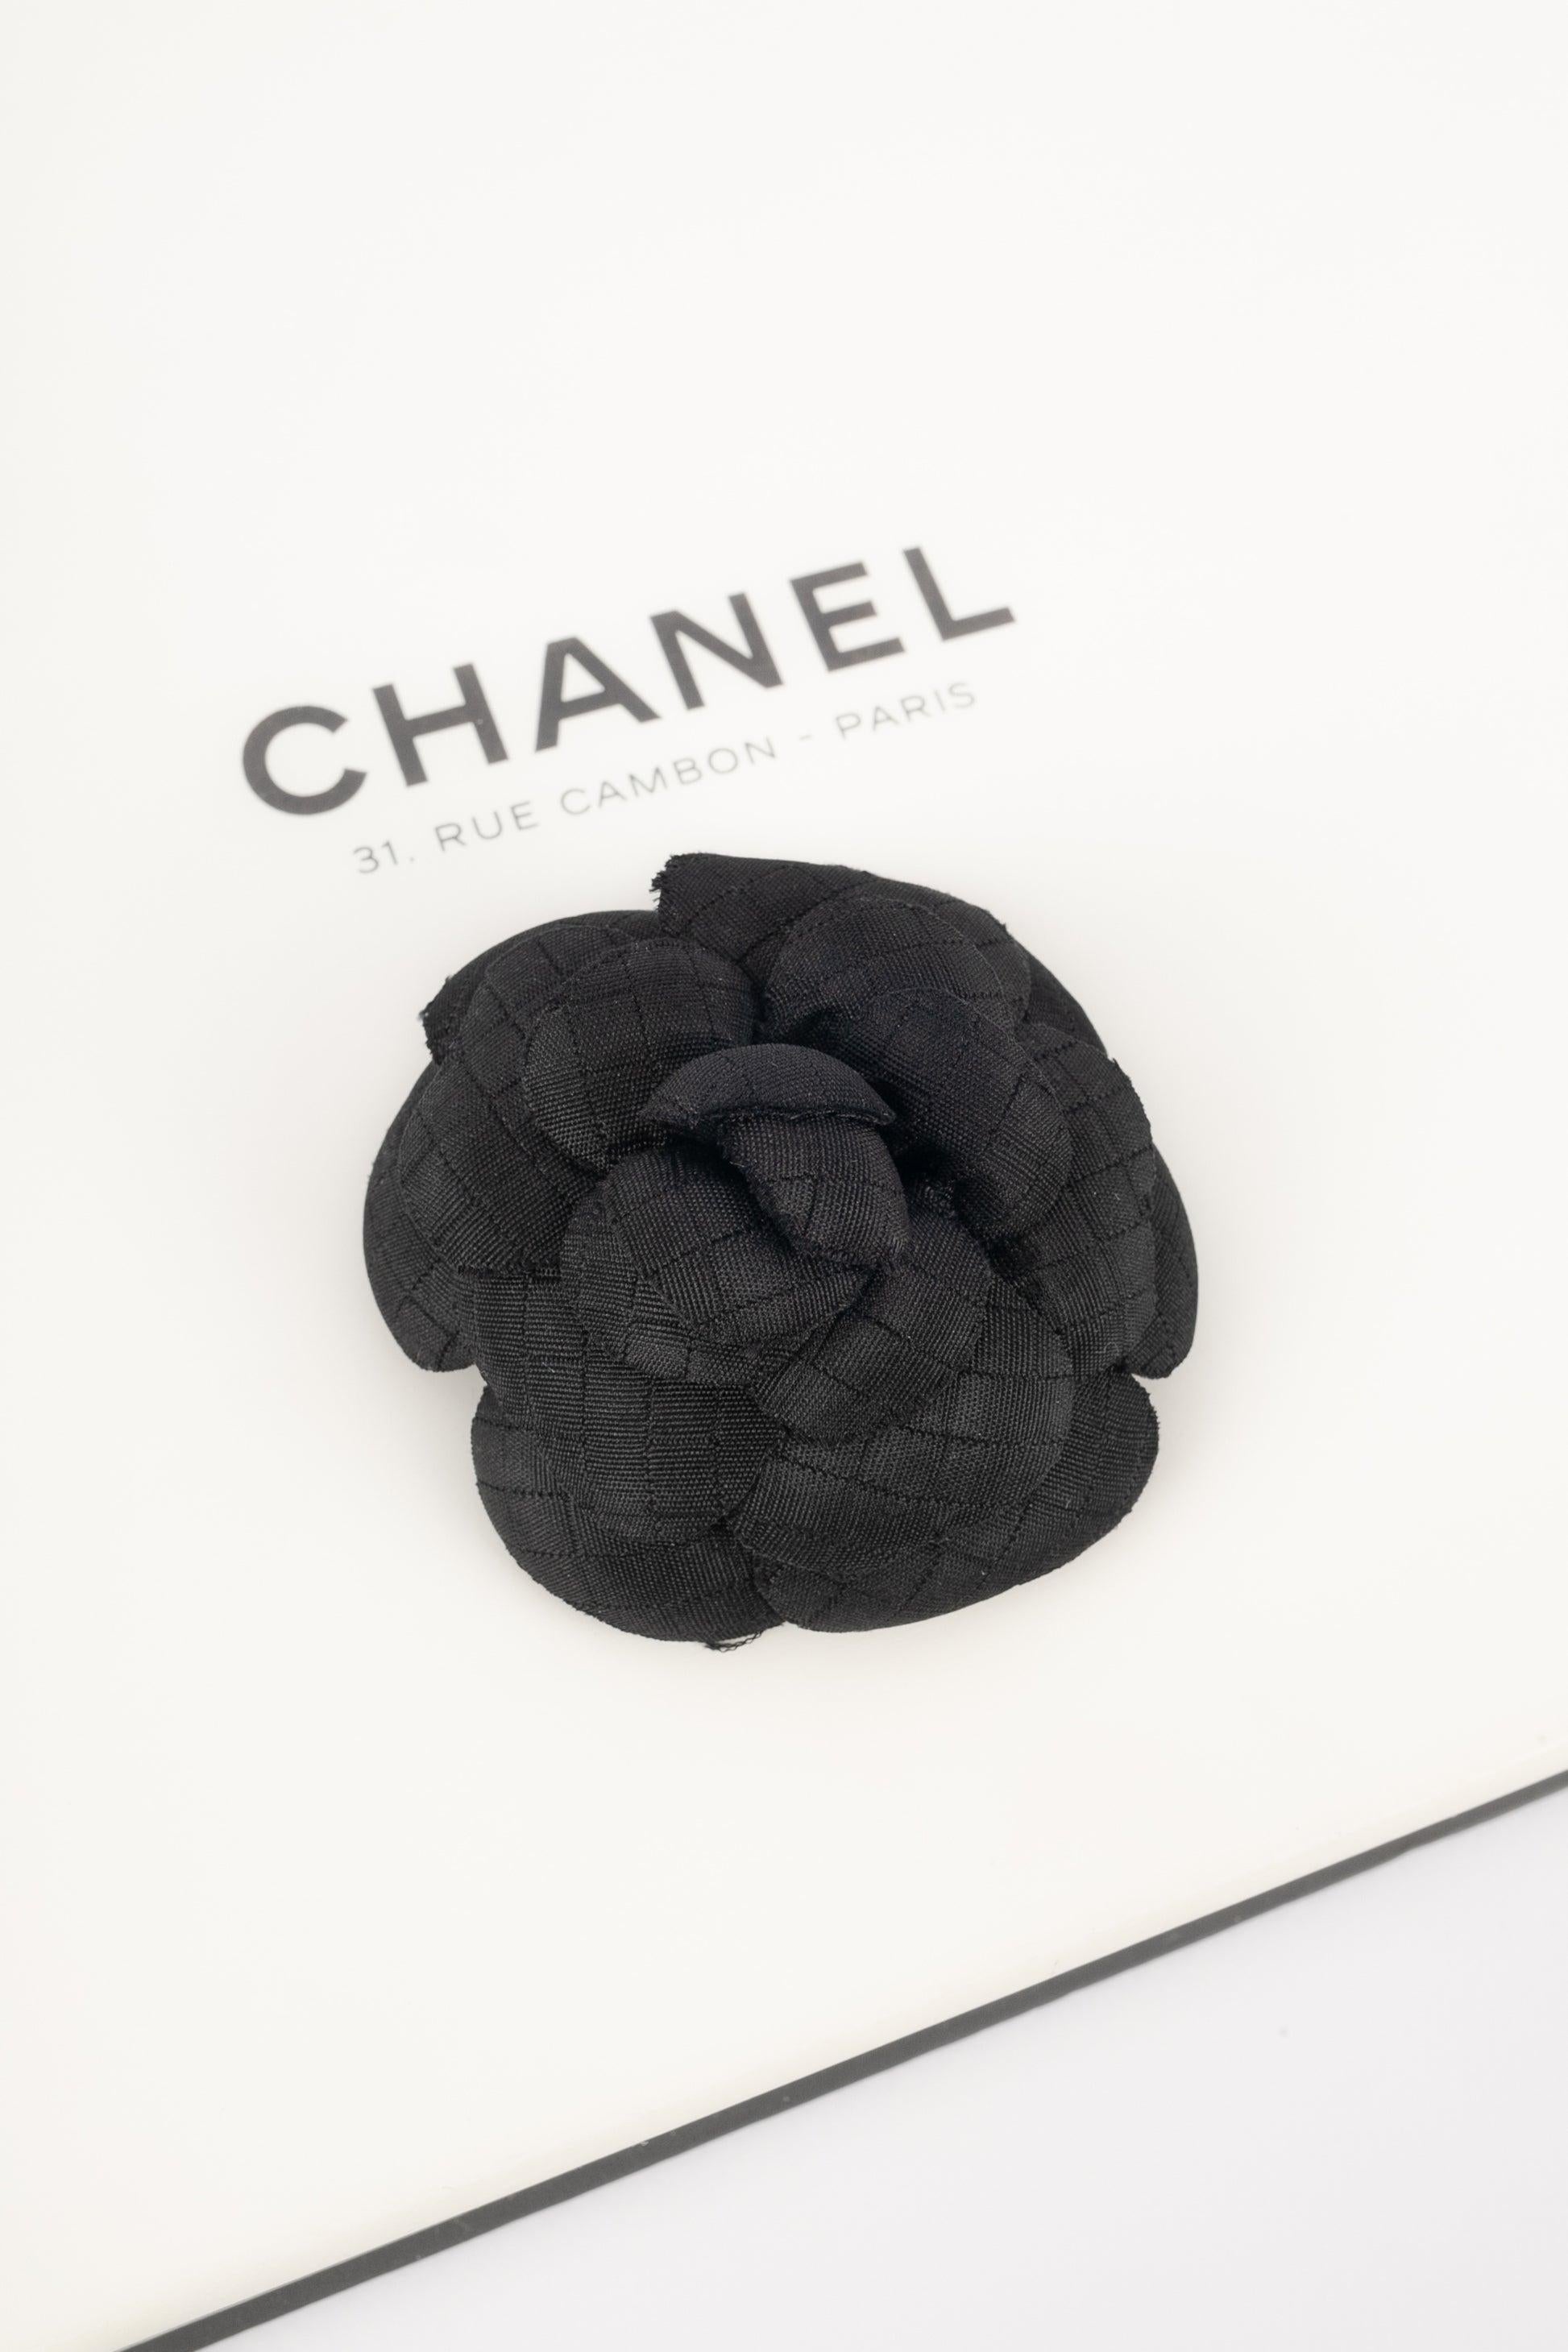 Chanel Black Woven Fabric Camellia Brooch 2